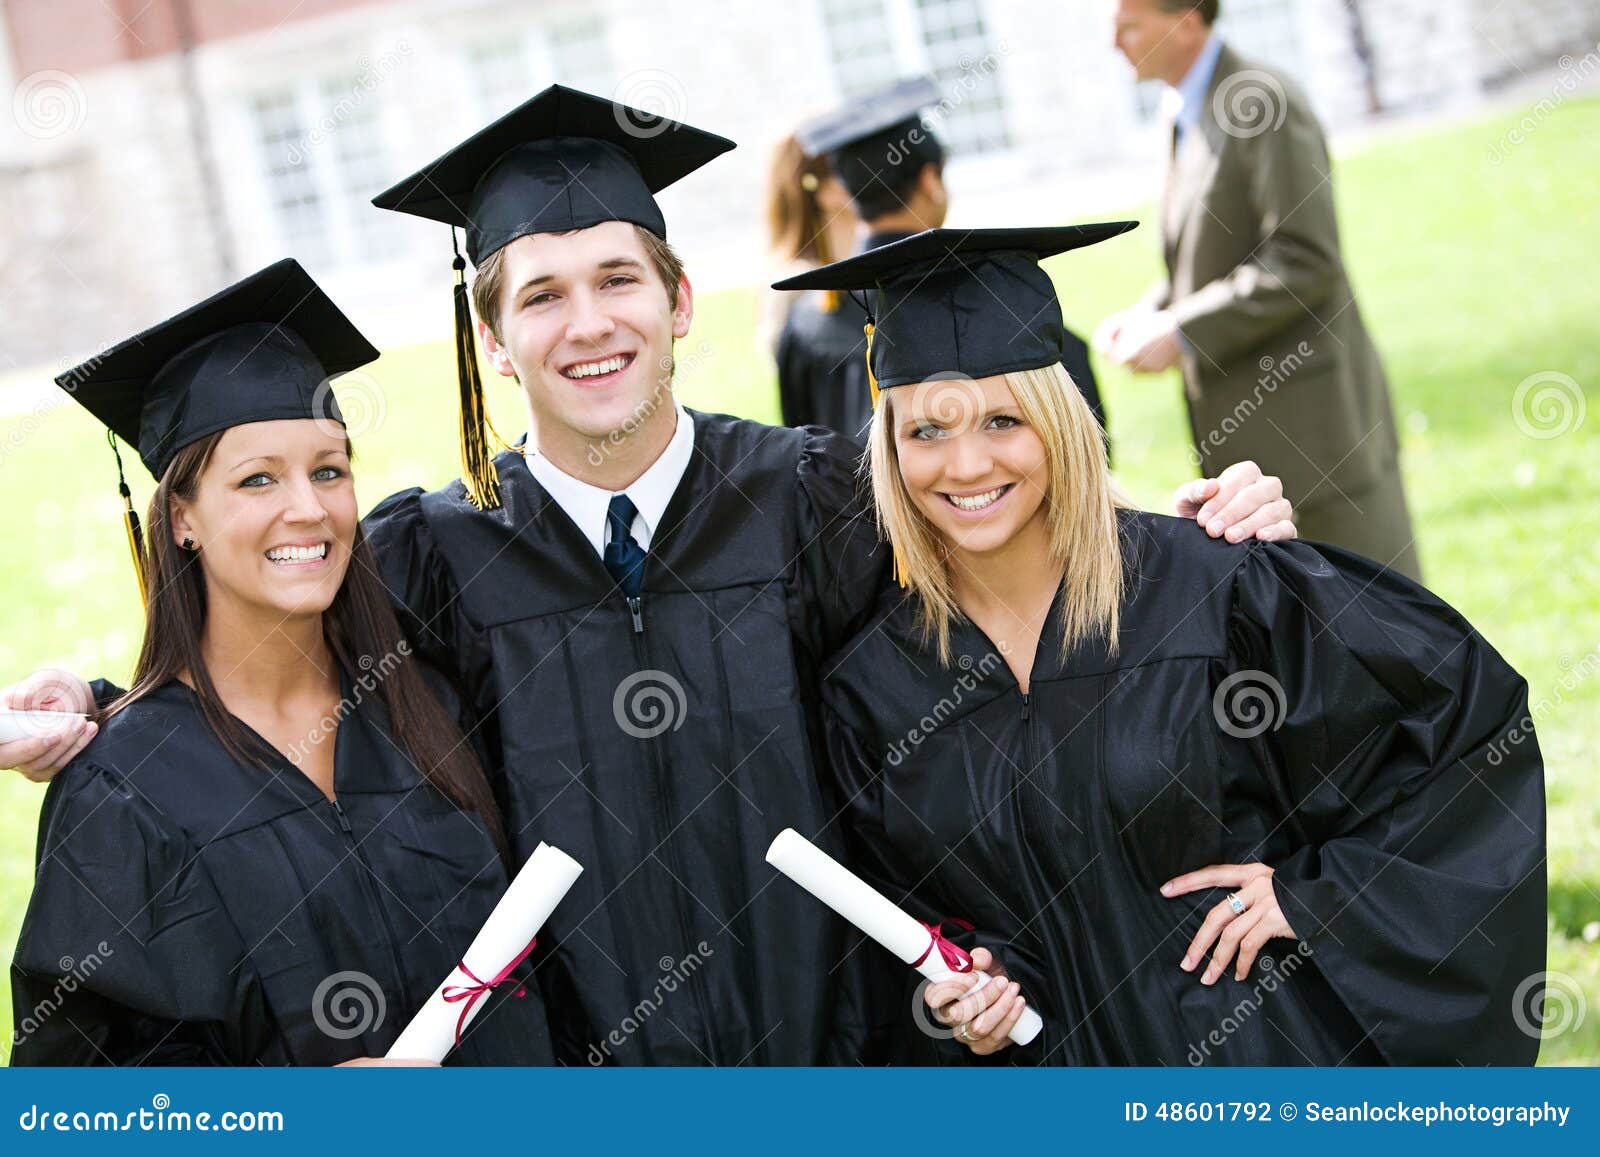 Best Friend Graduation Picture Ideas | TikTok